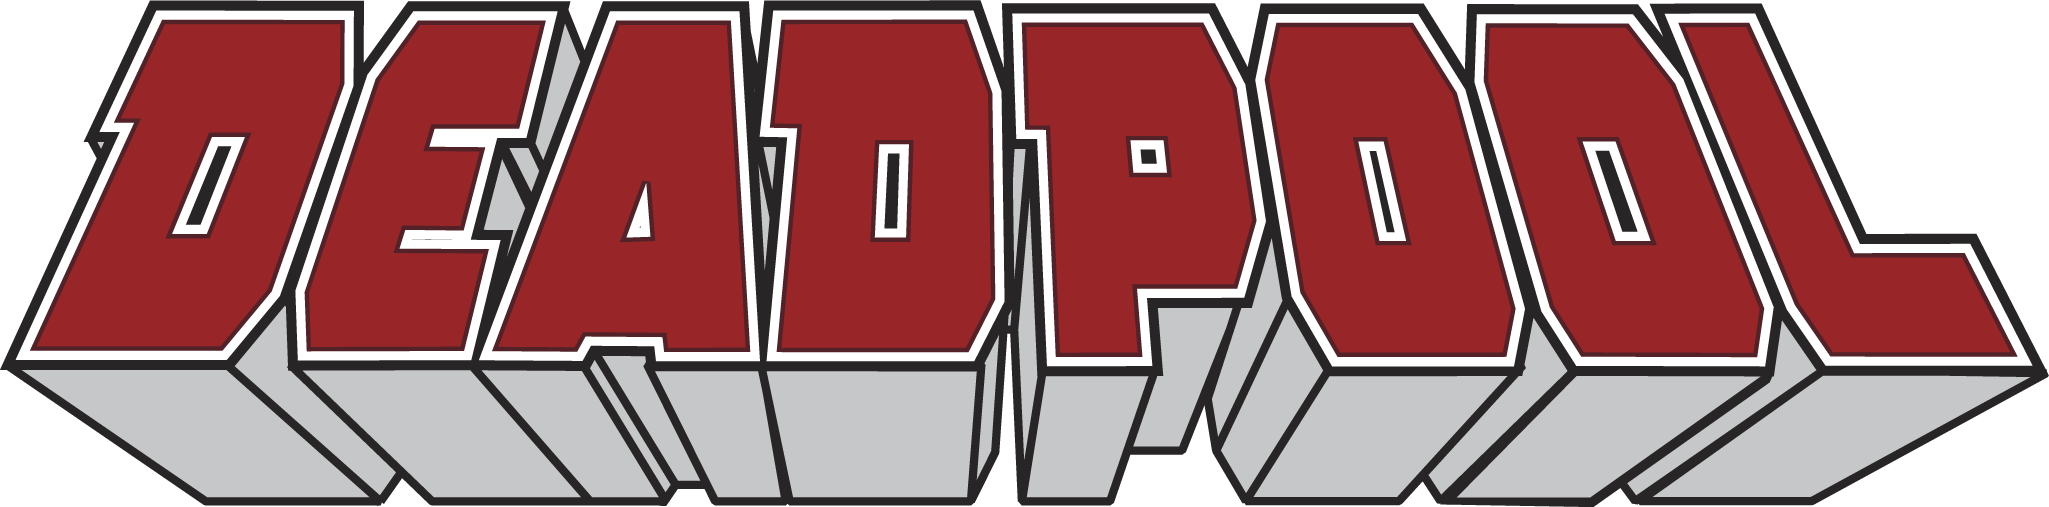 Fondo oficial de imagen PNG de logo de Deadpool